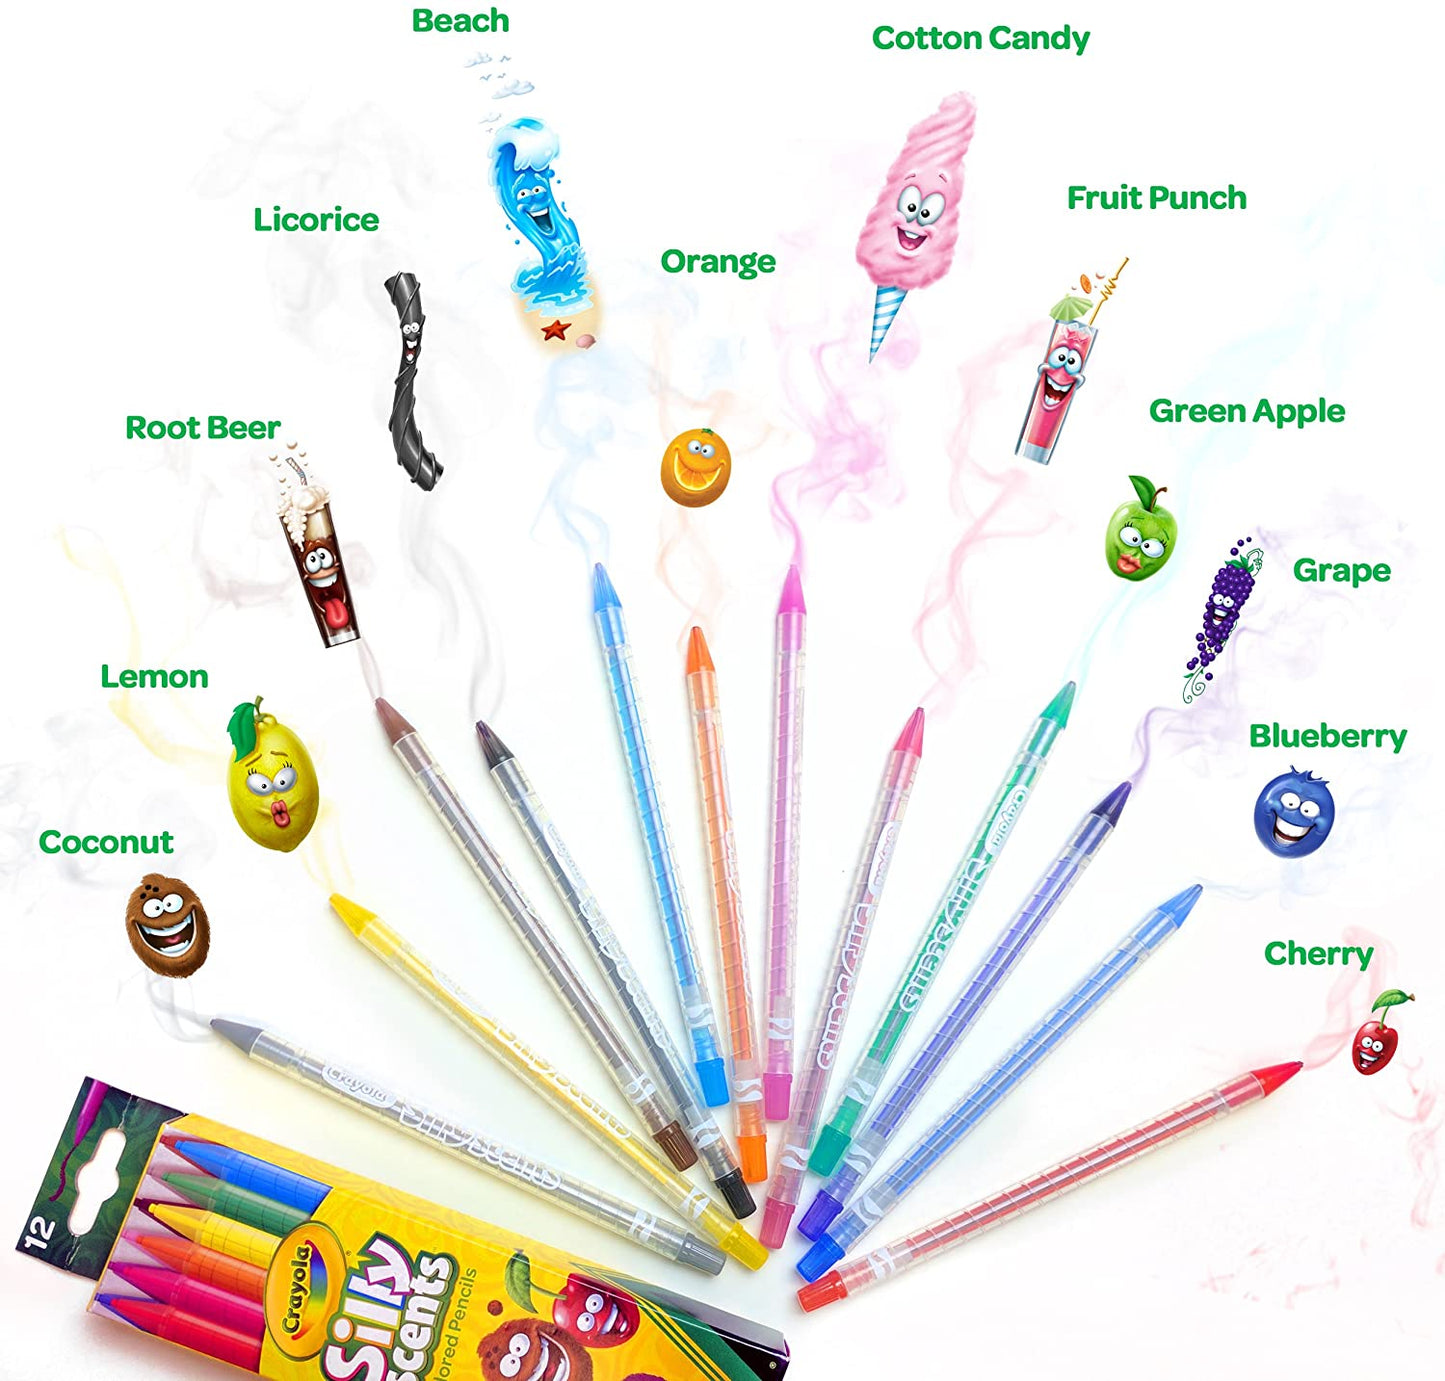 Crayola - Silly Scents Twistable Pencils